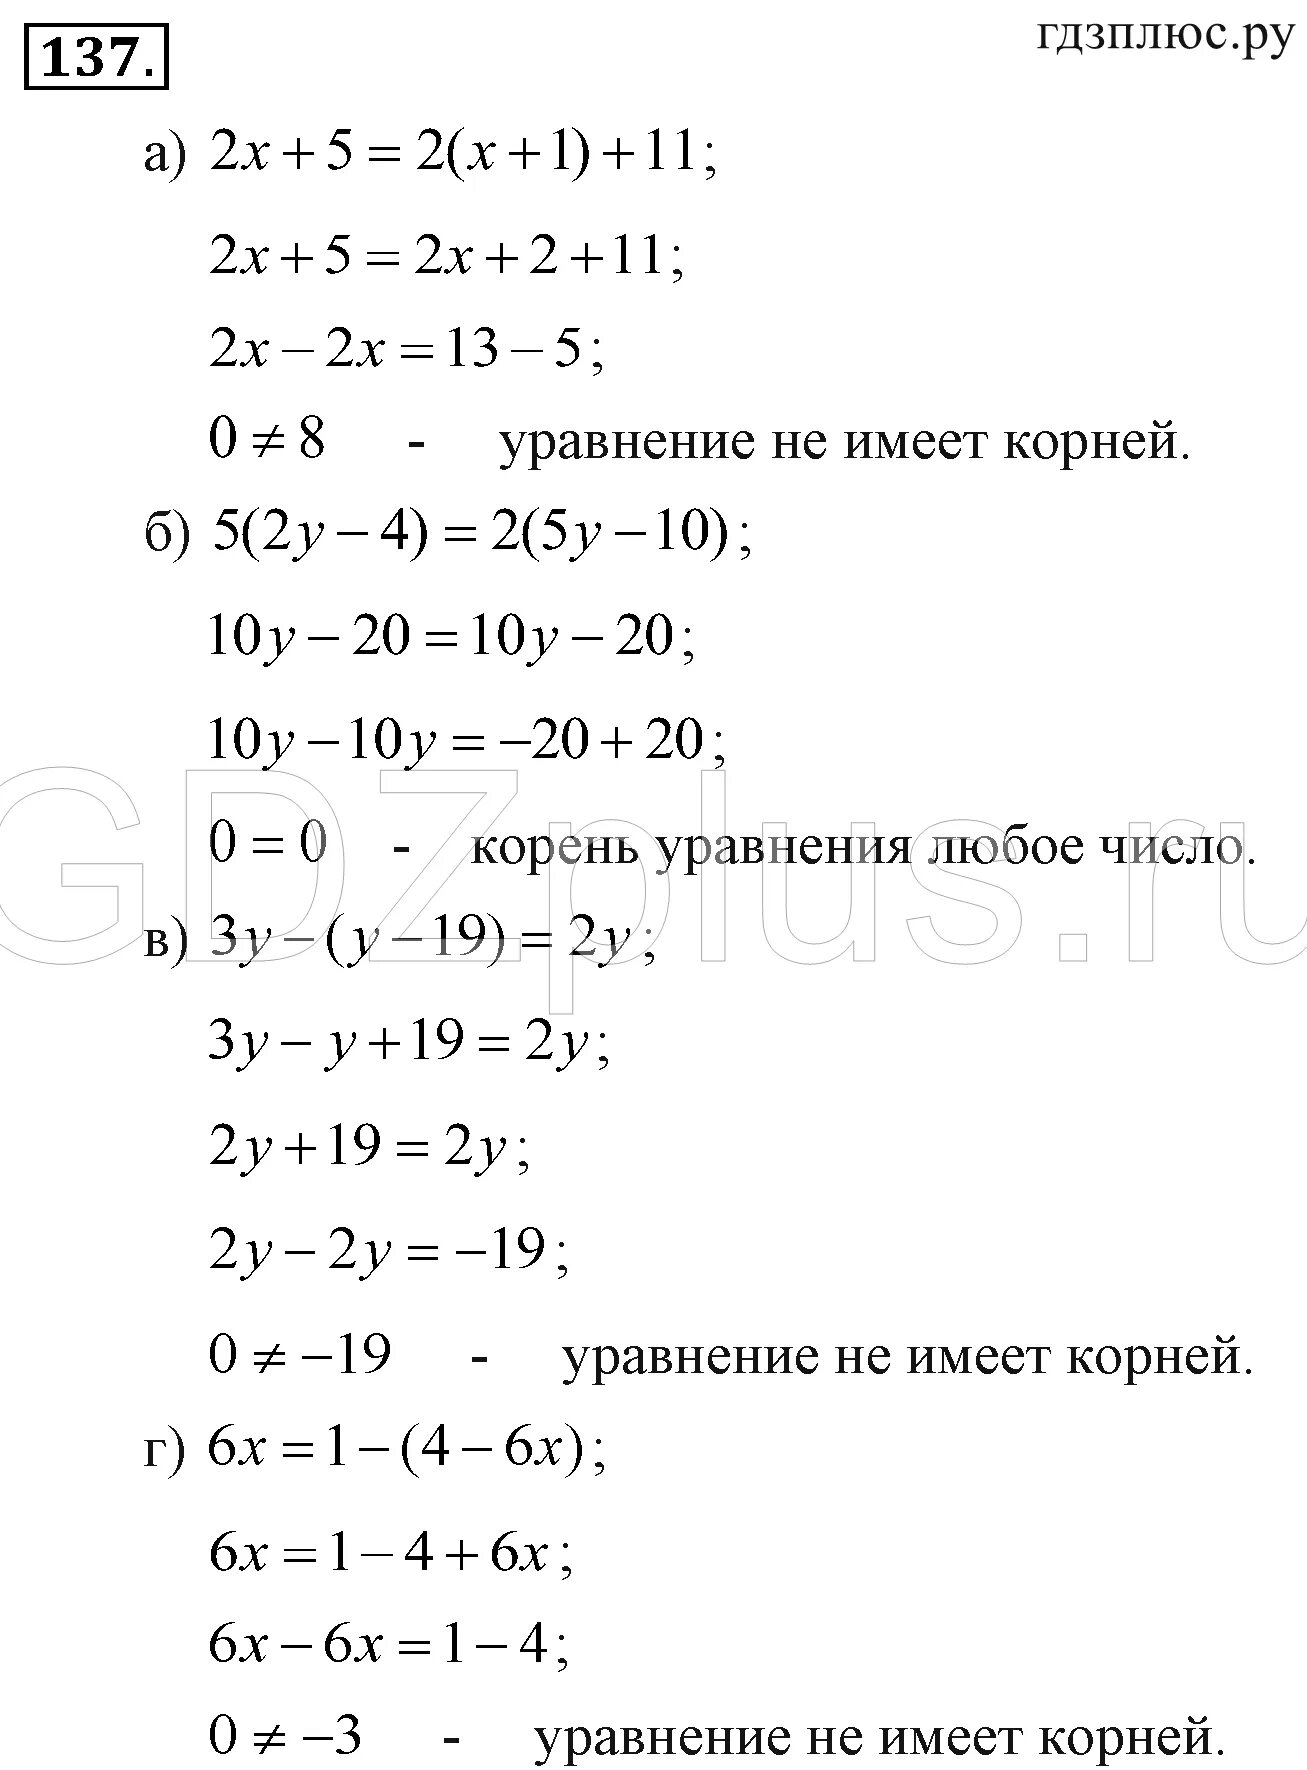 Алгебра 7 класс макарычев номер 208. Алгебра 7 класс Макарычев решение уравнений. Уравнения 7 класс Макарычев. Алгебра 7 класс Макарычев темы по порядку. Алгебра 7 класс Макарычев с-7 номер 7.